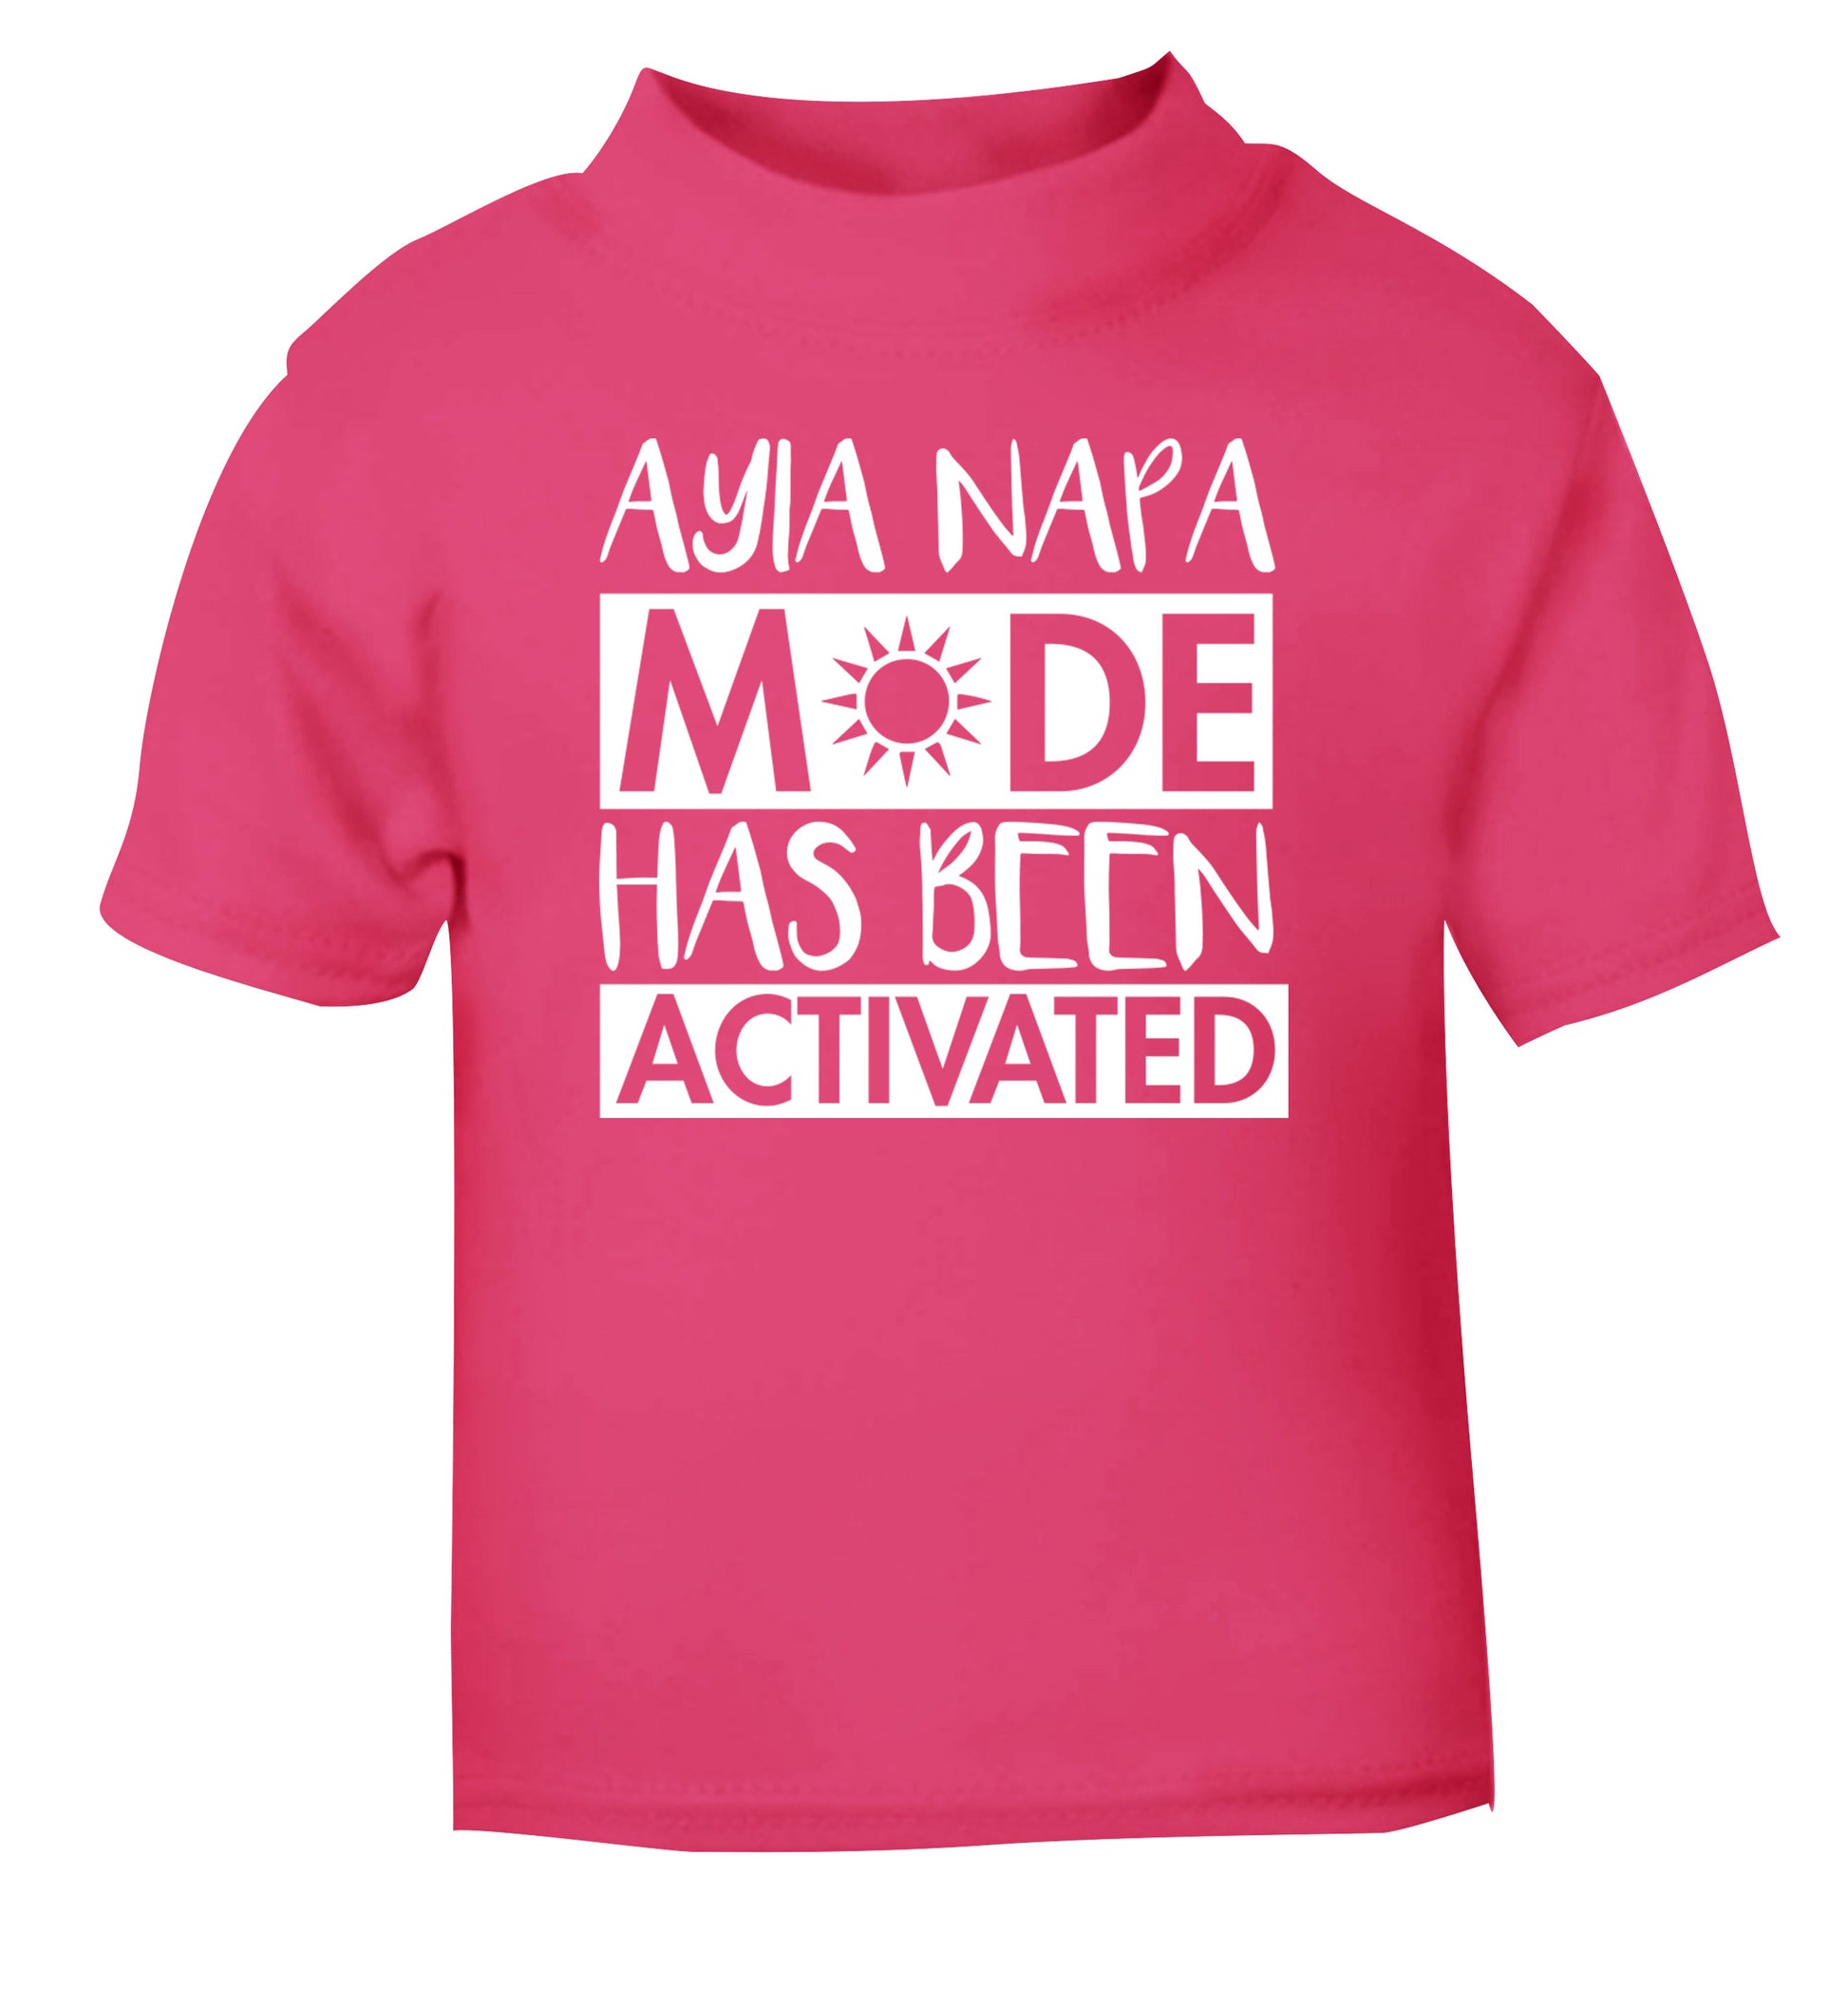 Aiya Napa mode has been activated pink Baby Toddler Tshirt 2 Years